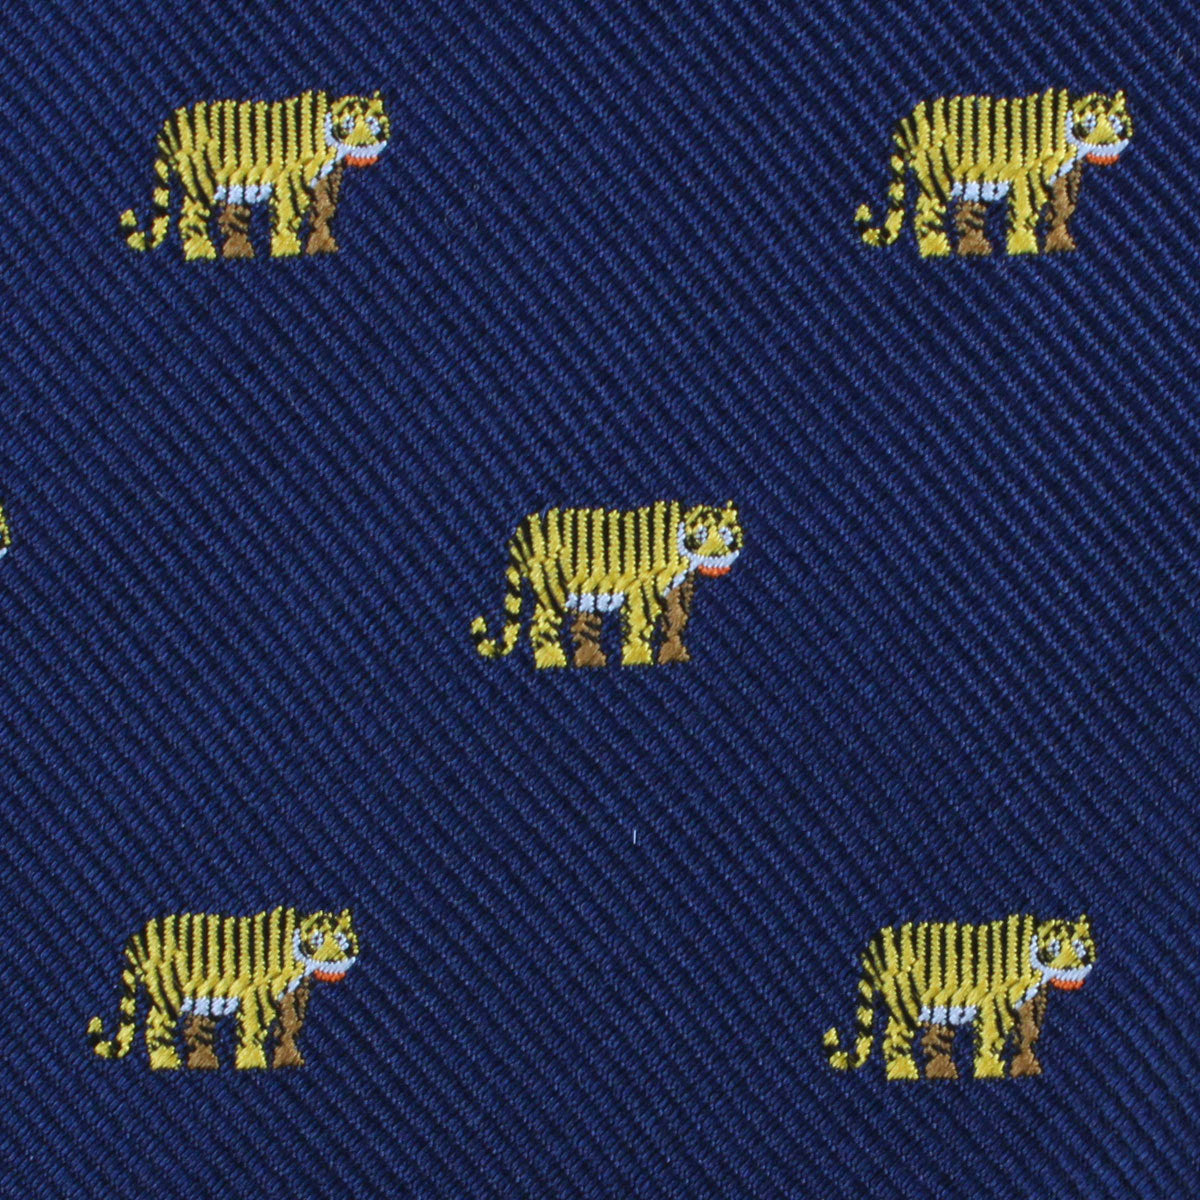 Siberian Tiger Fabric Necktie